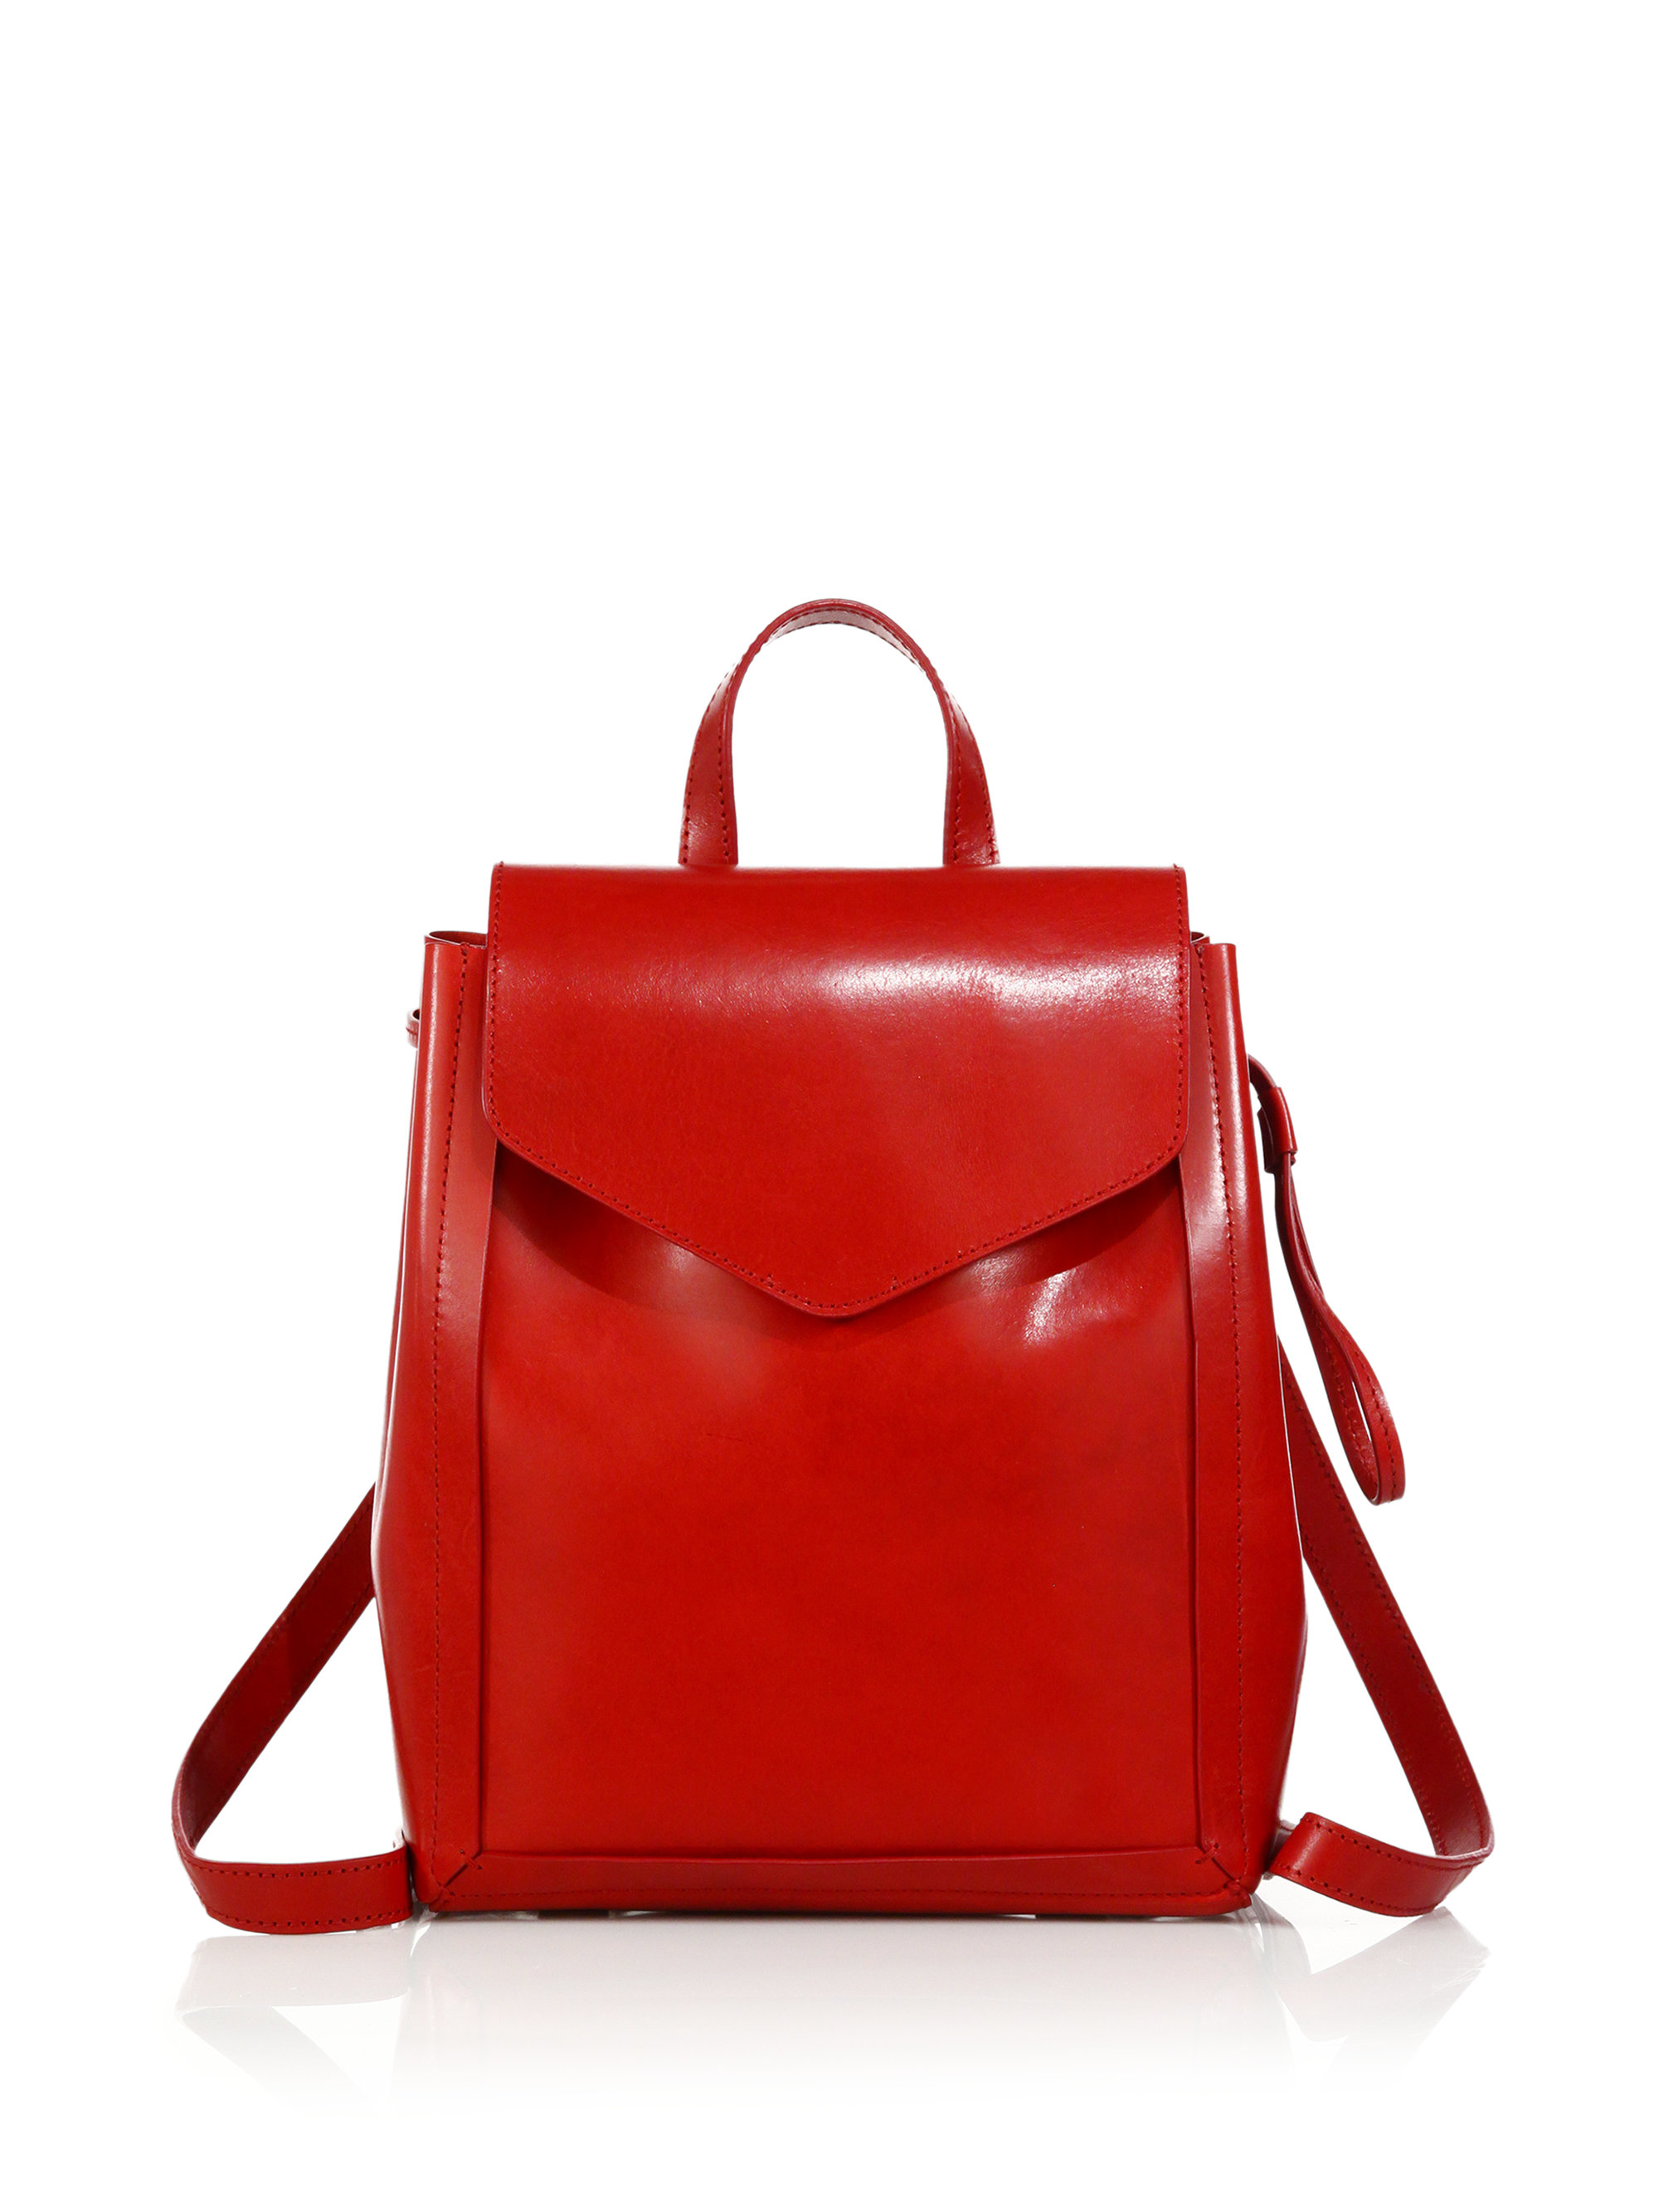 Loeffler Randall Mini Leather Backpack in Red - Lyst